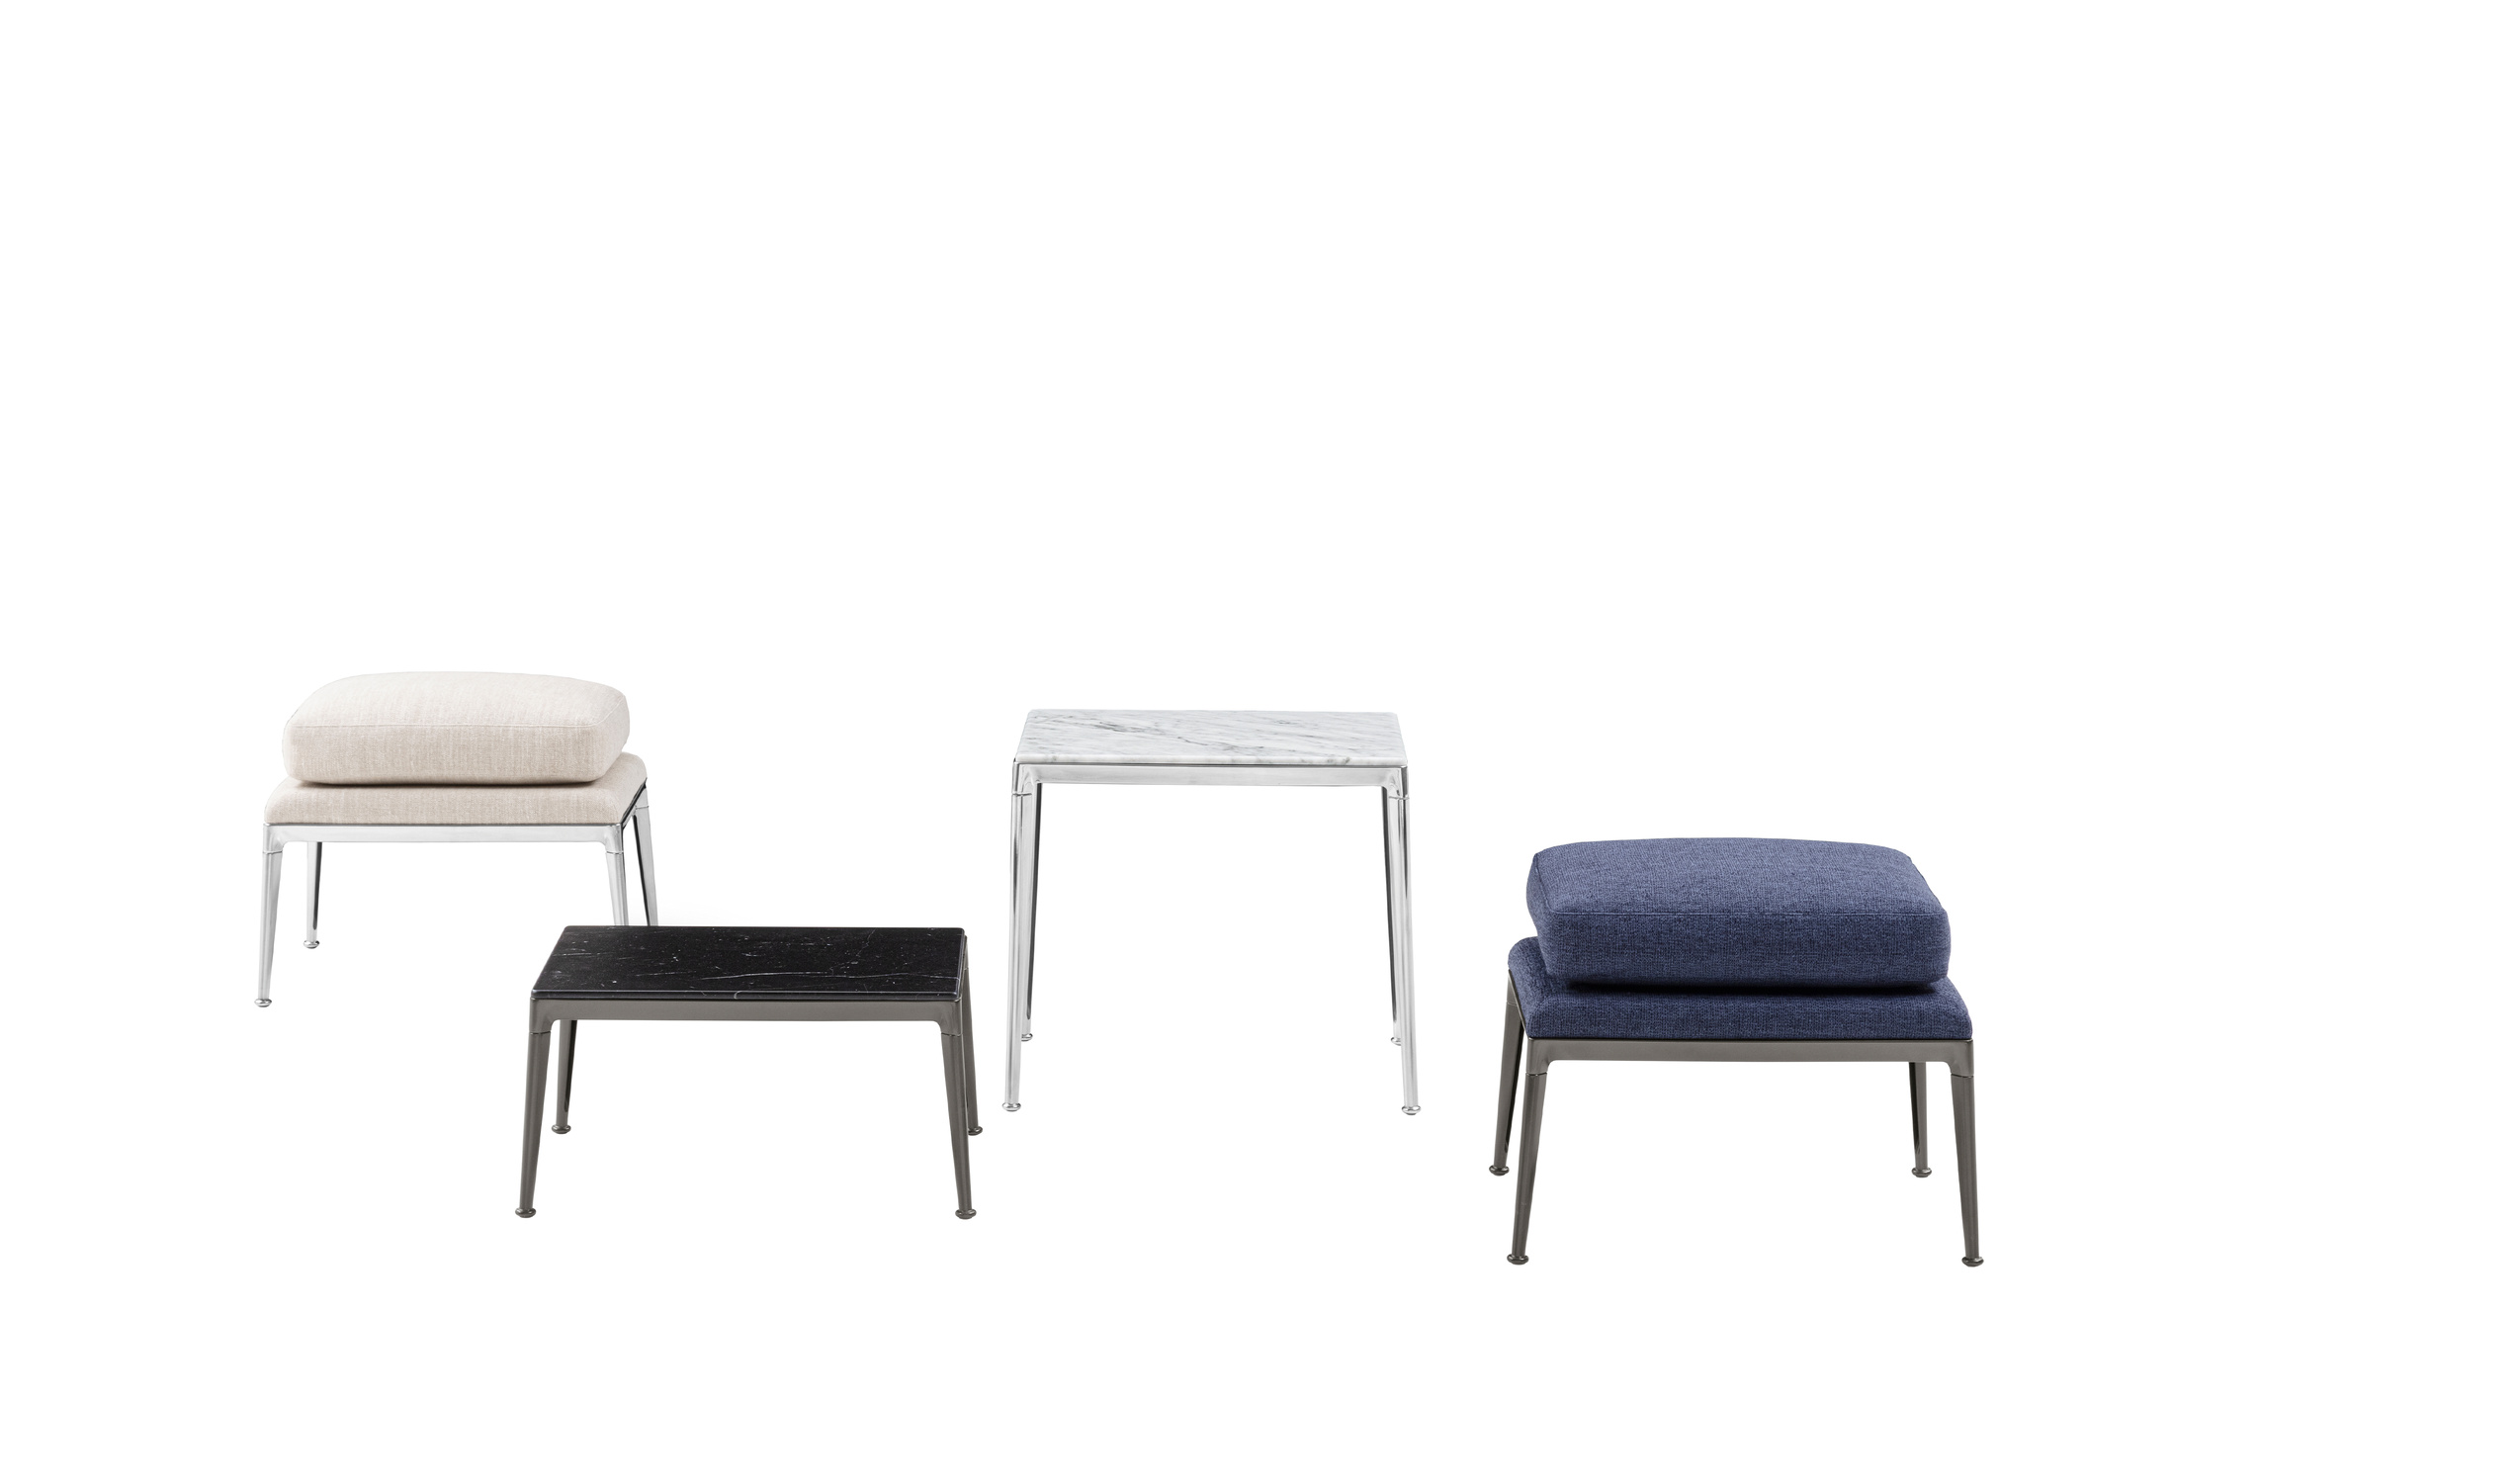 Designer italian modern small tables  - Mirto Indoor Small tables 1